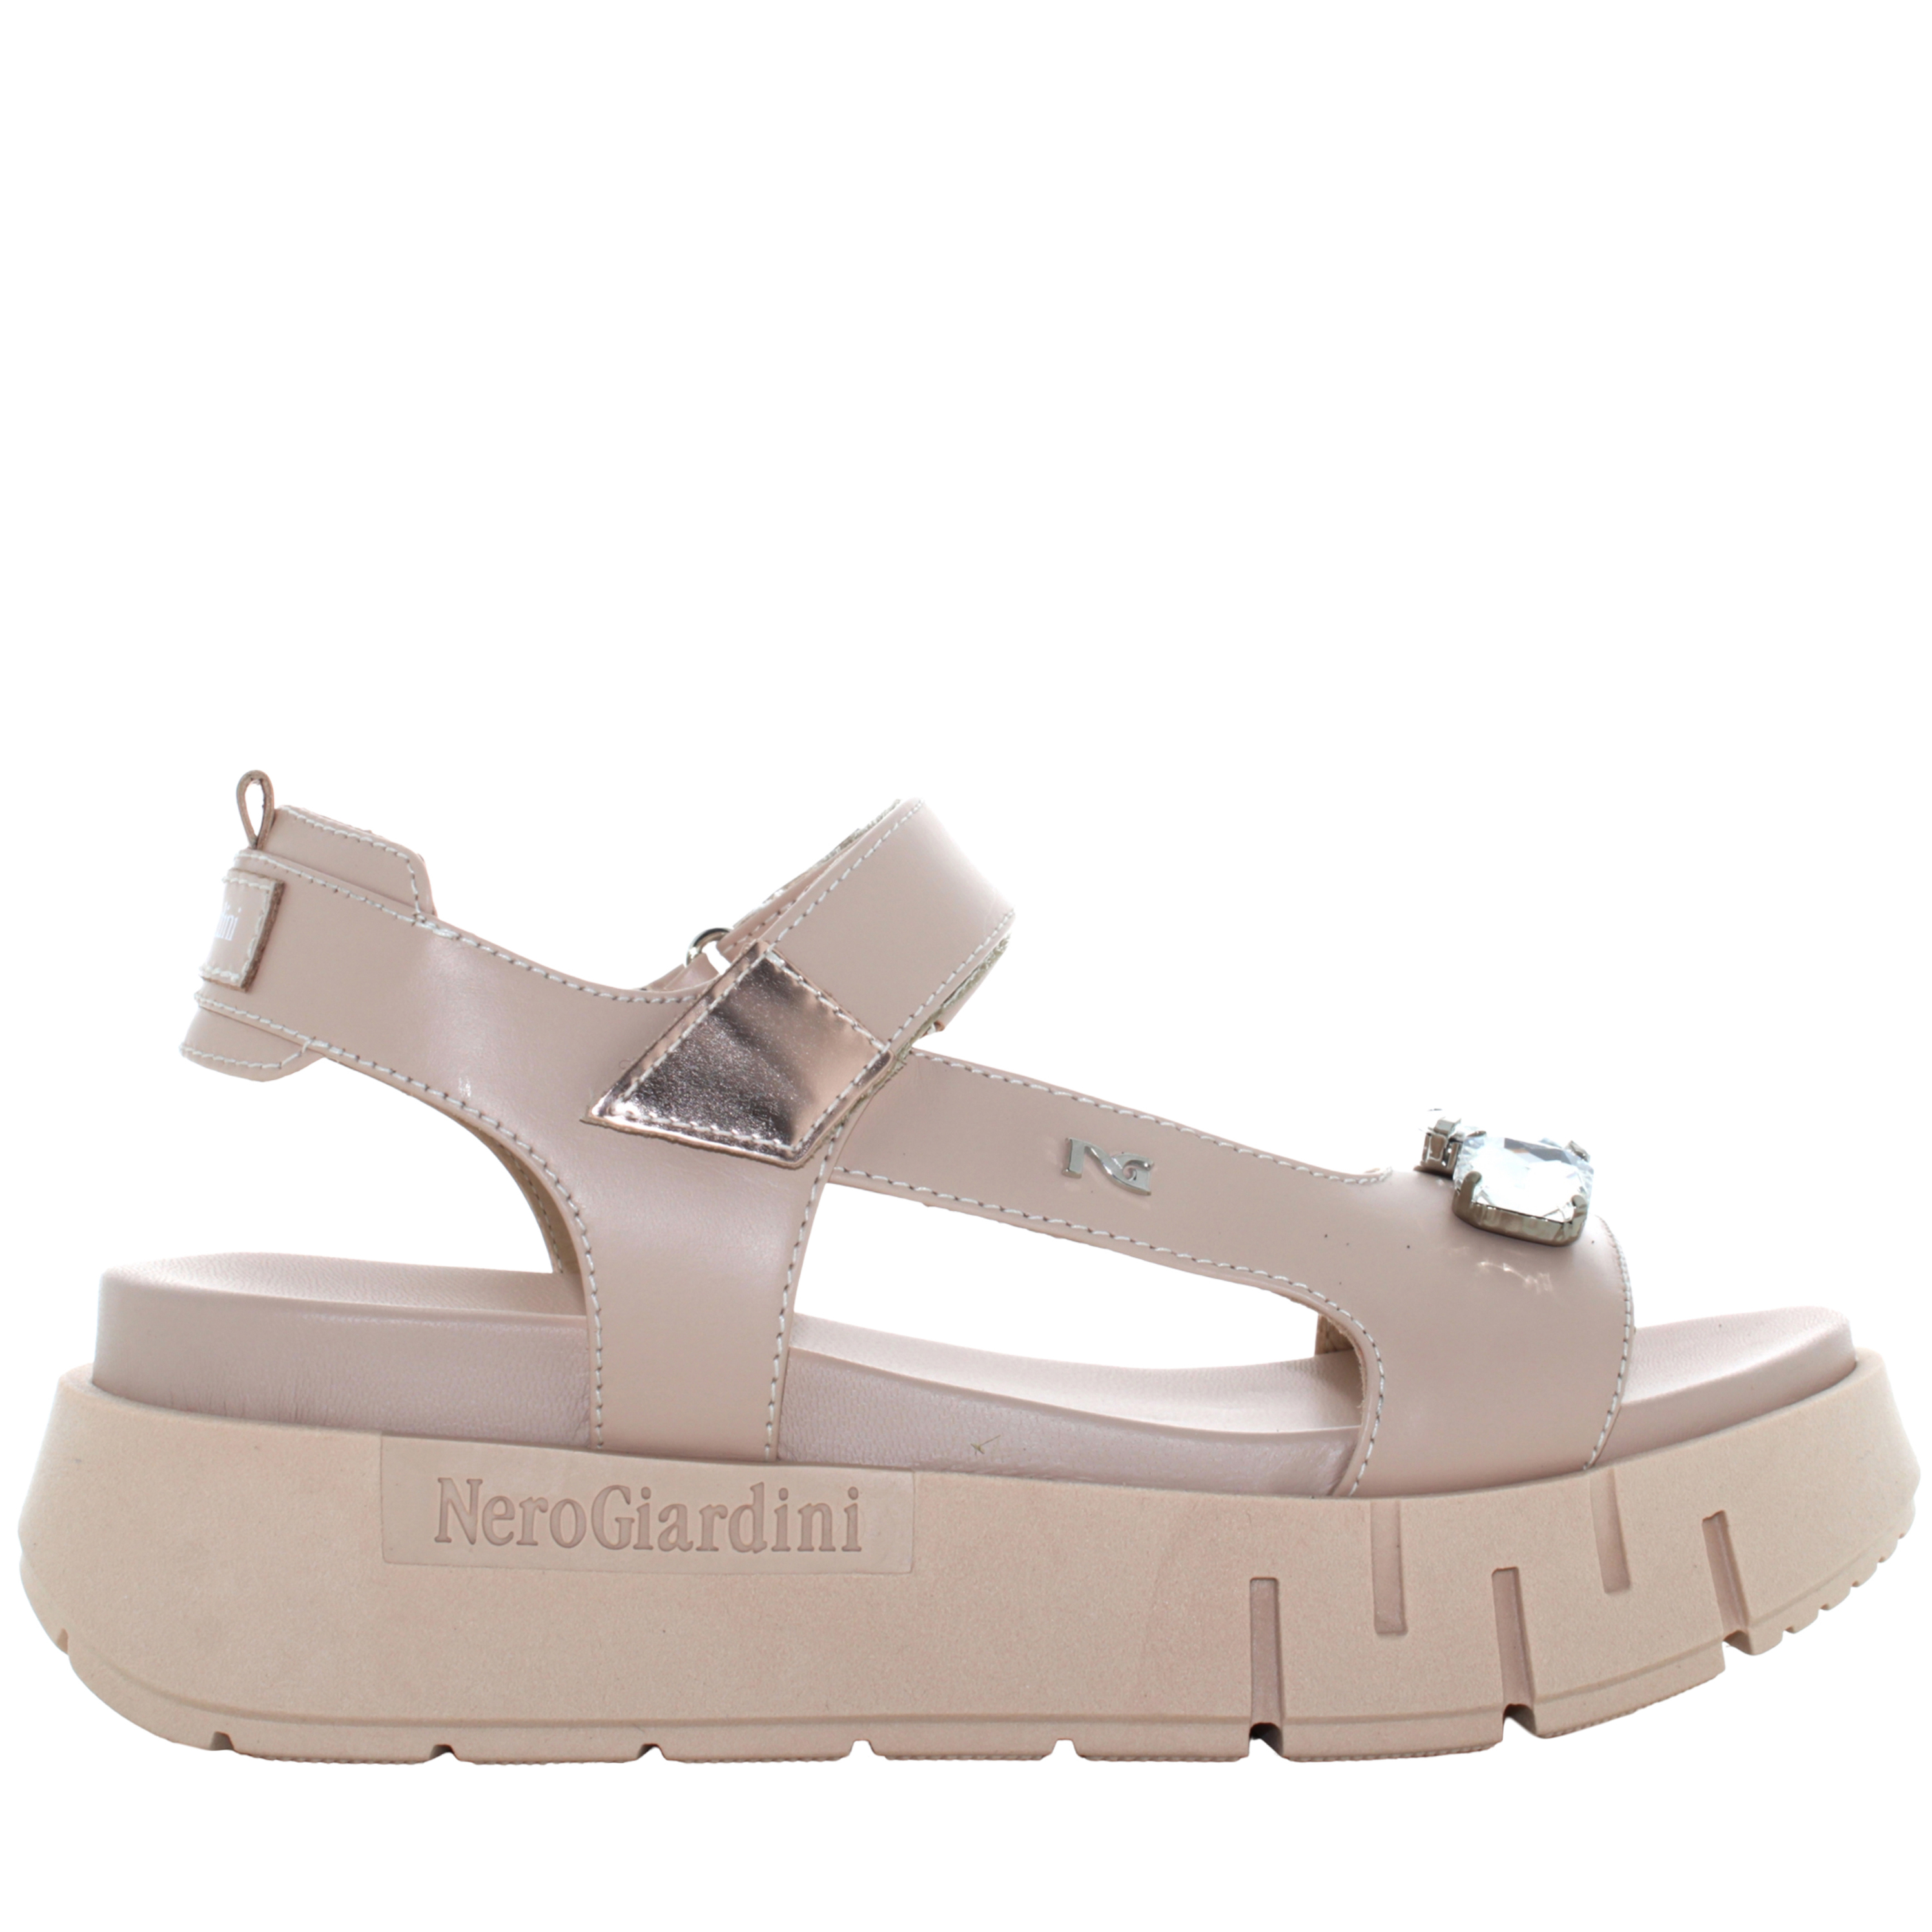 Nero Giardini P24aus women\'s sandals with platform E410707D/614